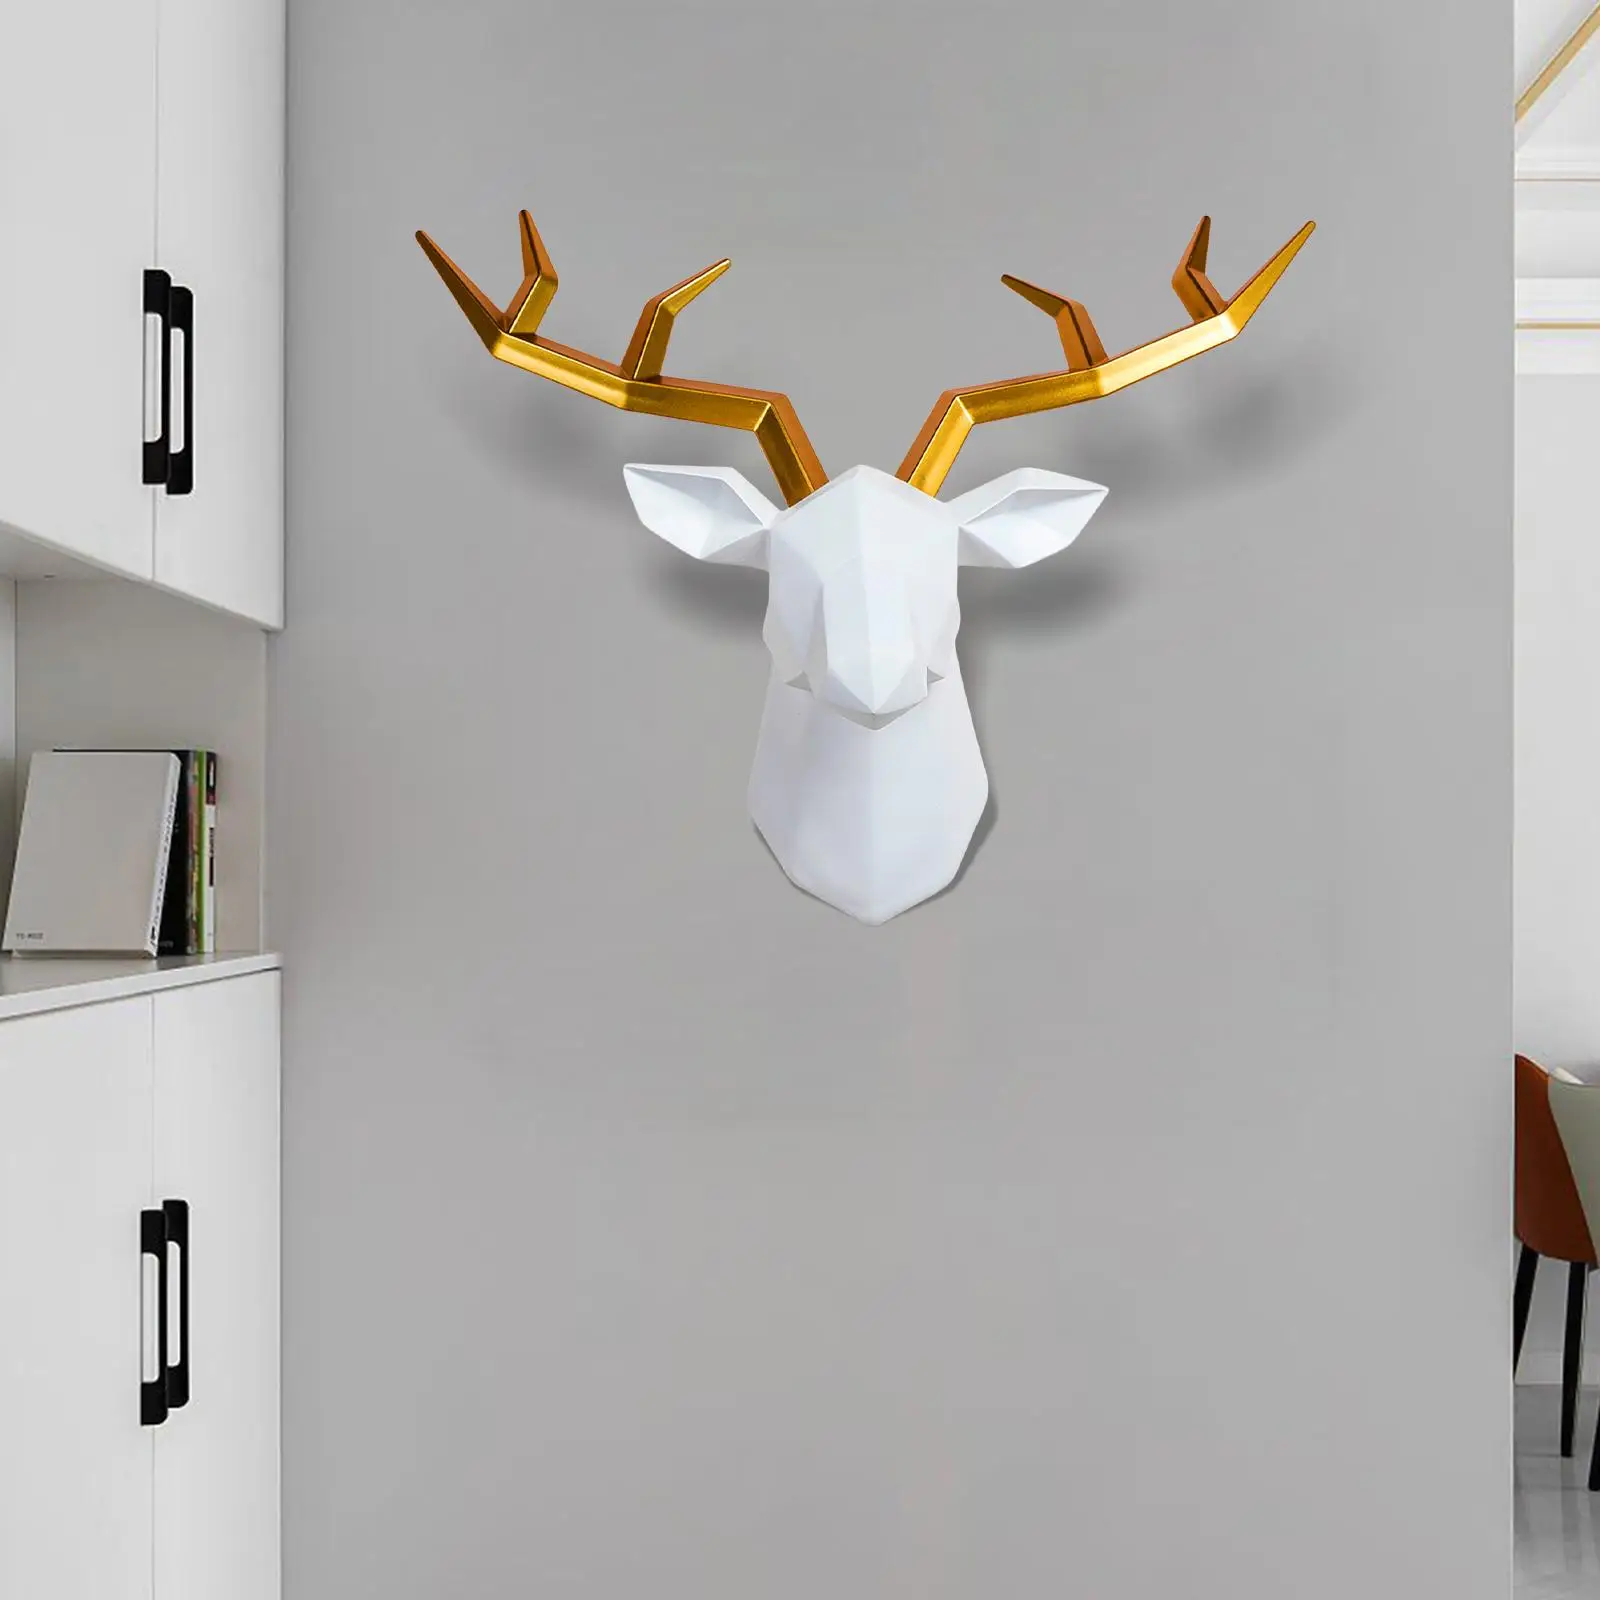 3D Resin Statue Figurines Wall Sculpture Wall Mount Decoration Elk Deer Head Wall Decor for Farmhouse Living Room Accent Bar